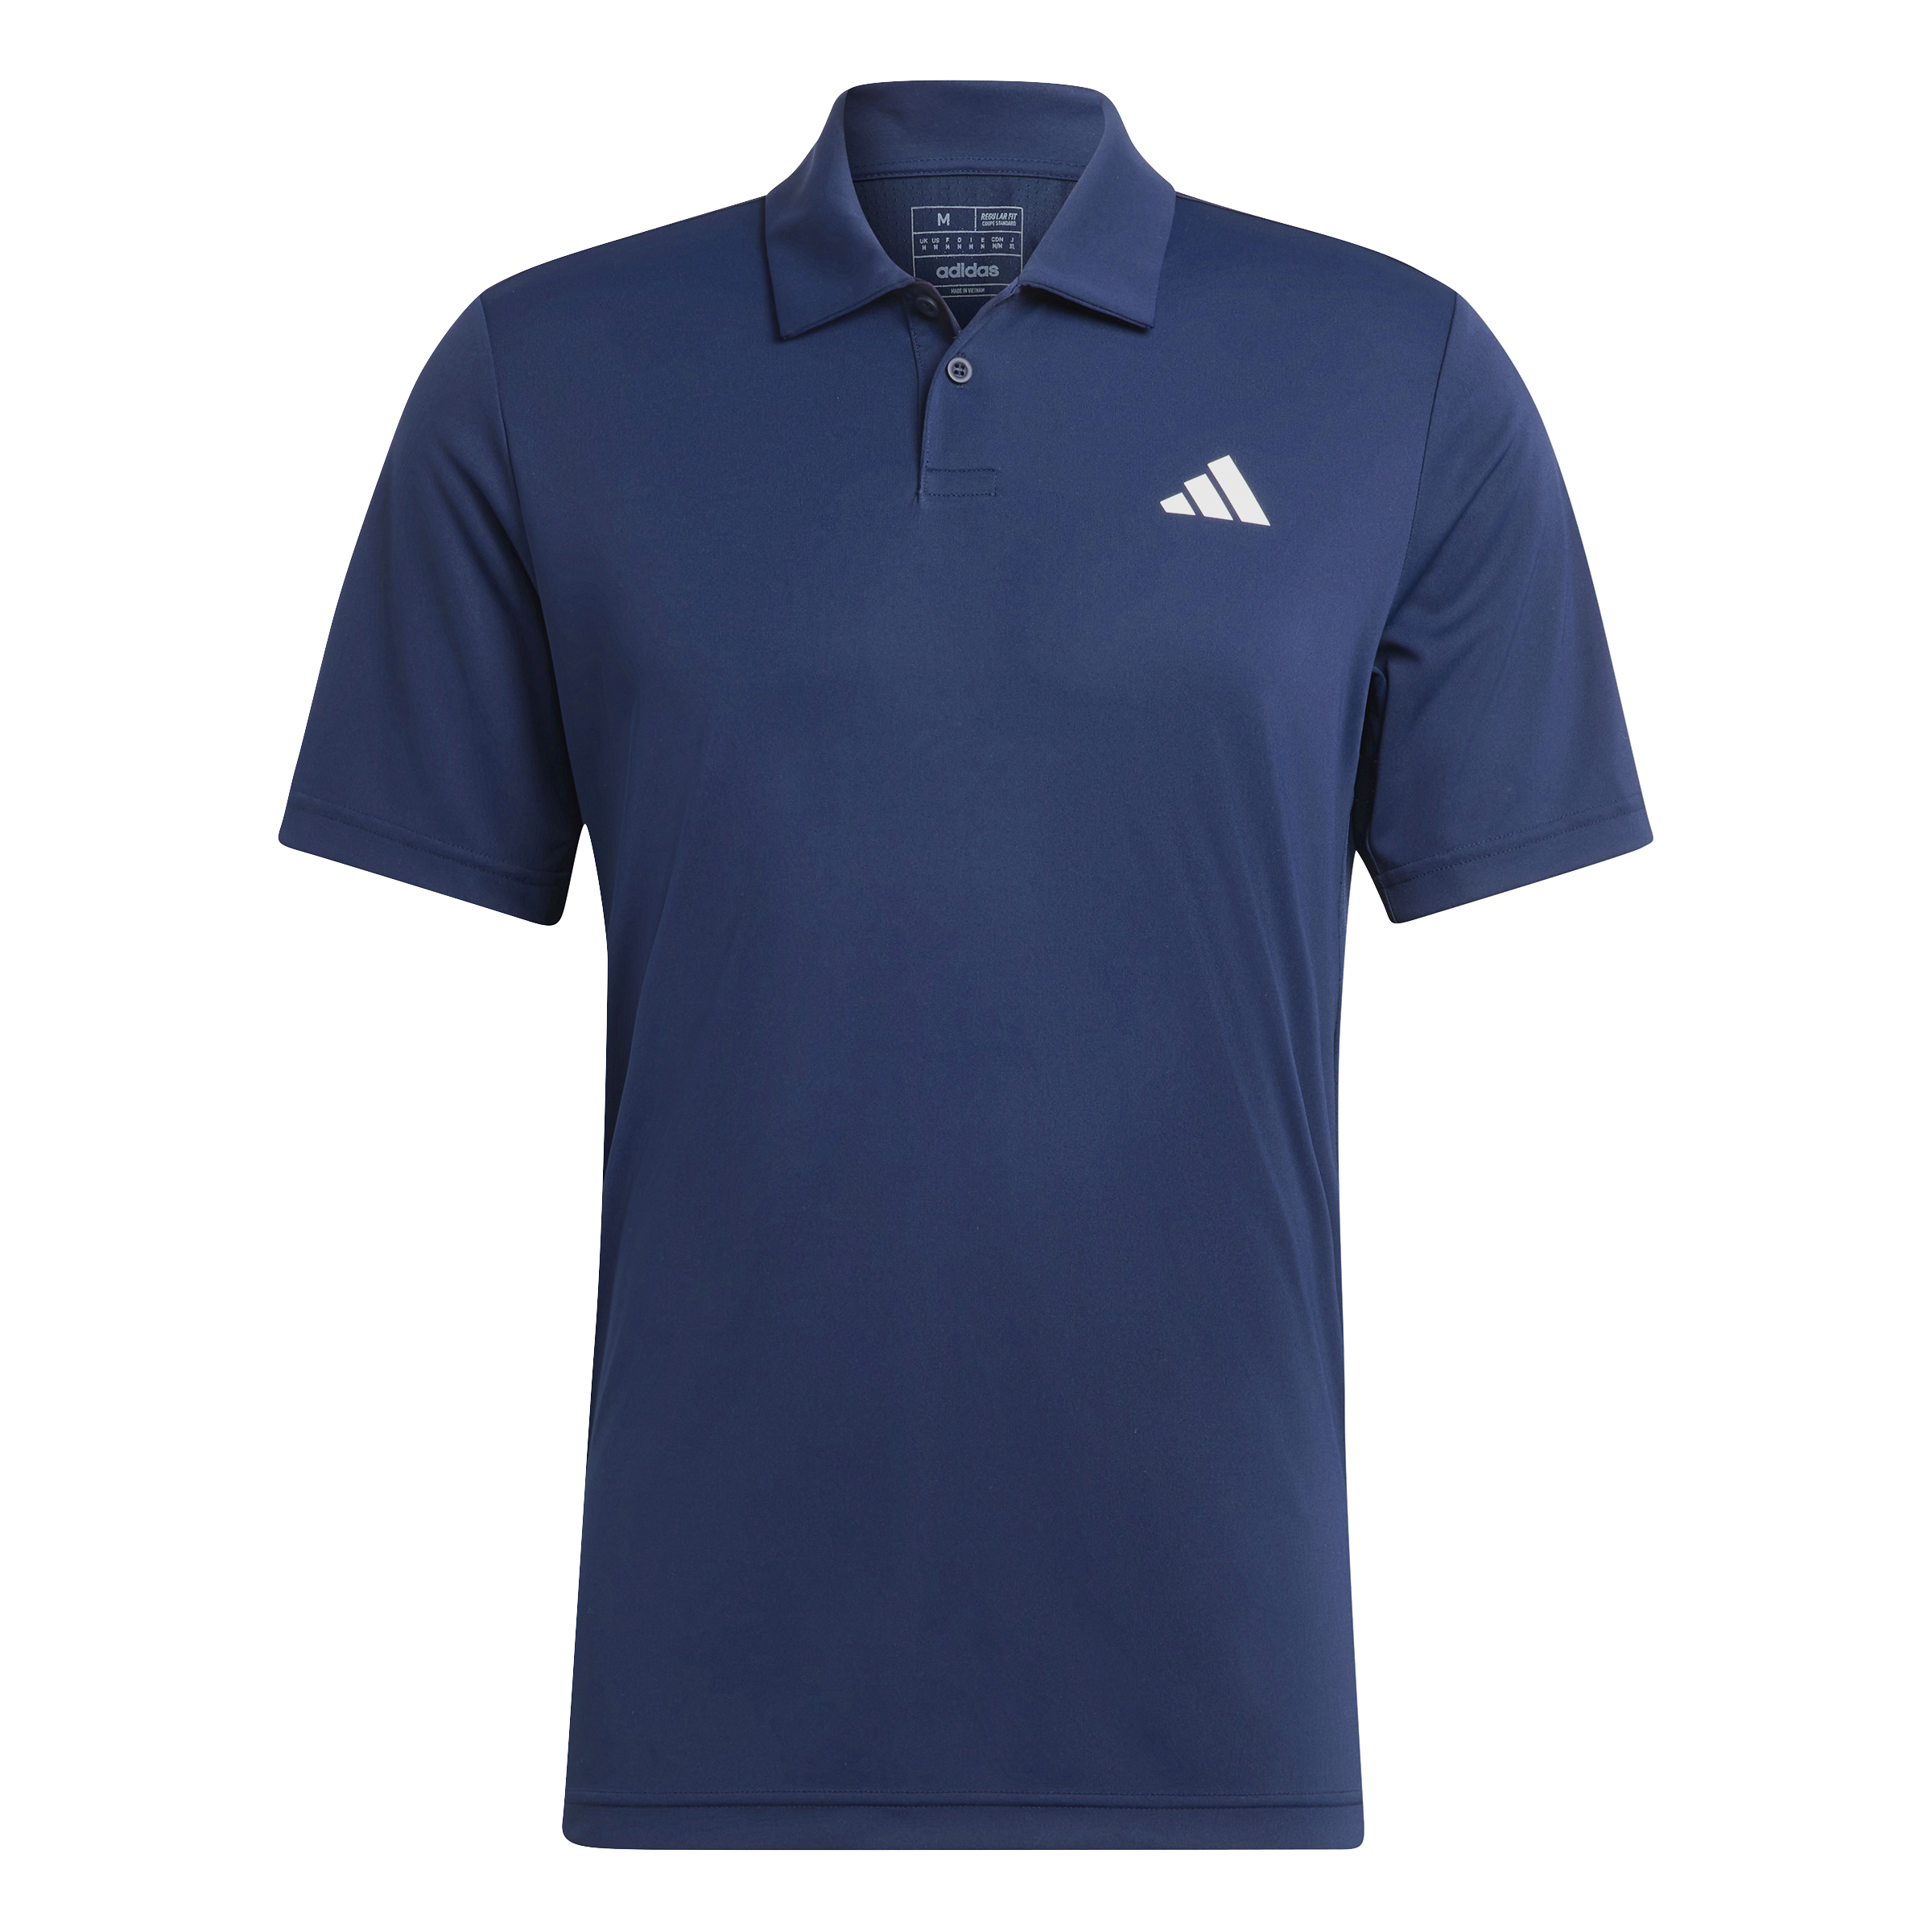 Adidas Club Polo Shirt (Navy) - XL